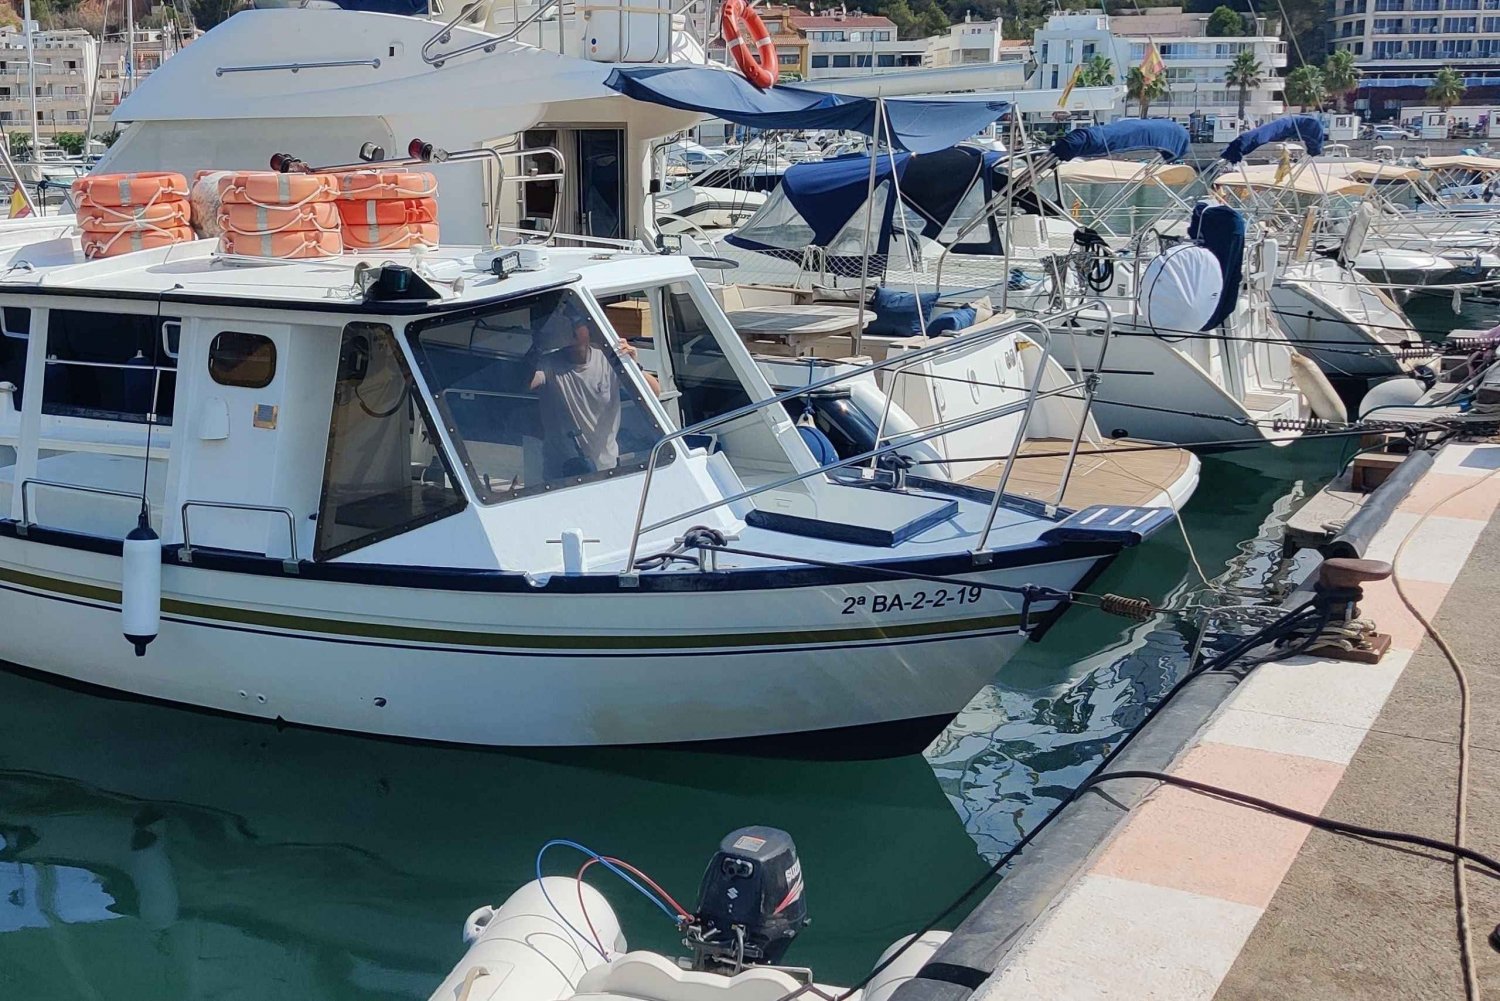 L'Estartit: Costa Brava Boat Trip to Les Illes Medes